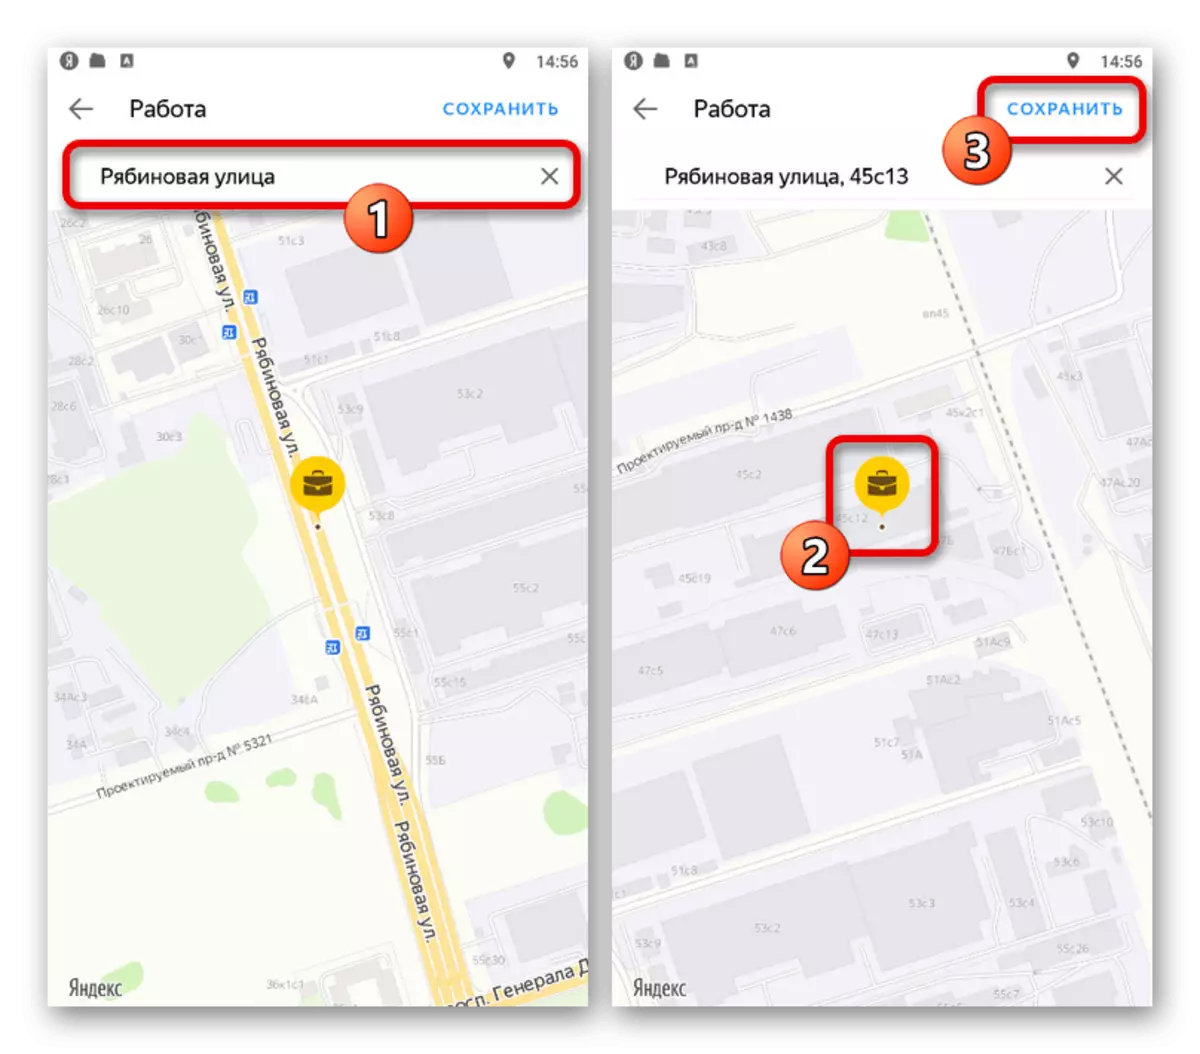 Yandex.maps એપ્લિકેશનમાં વ્યક્તિગત સરનામું ઉમેરવાની પ્રક્રિયા